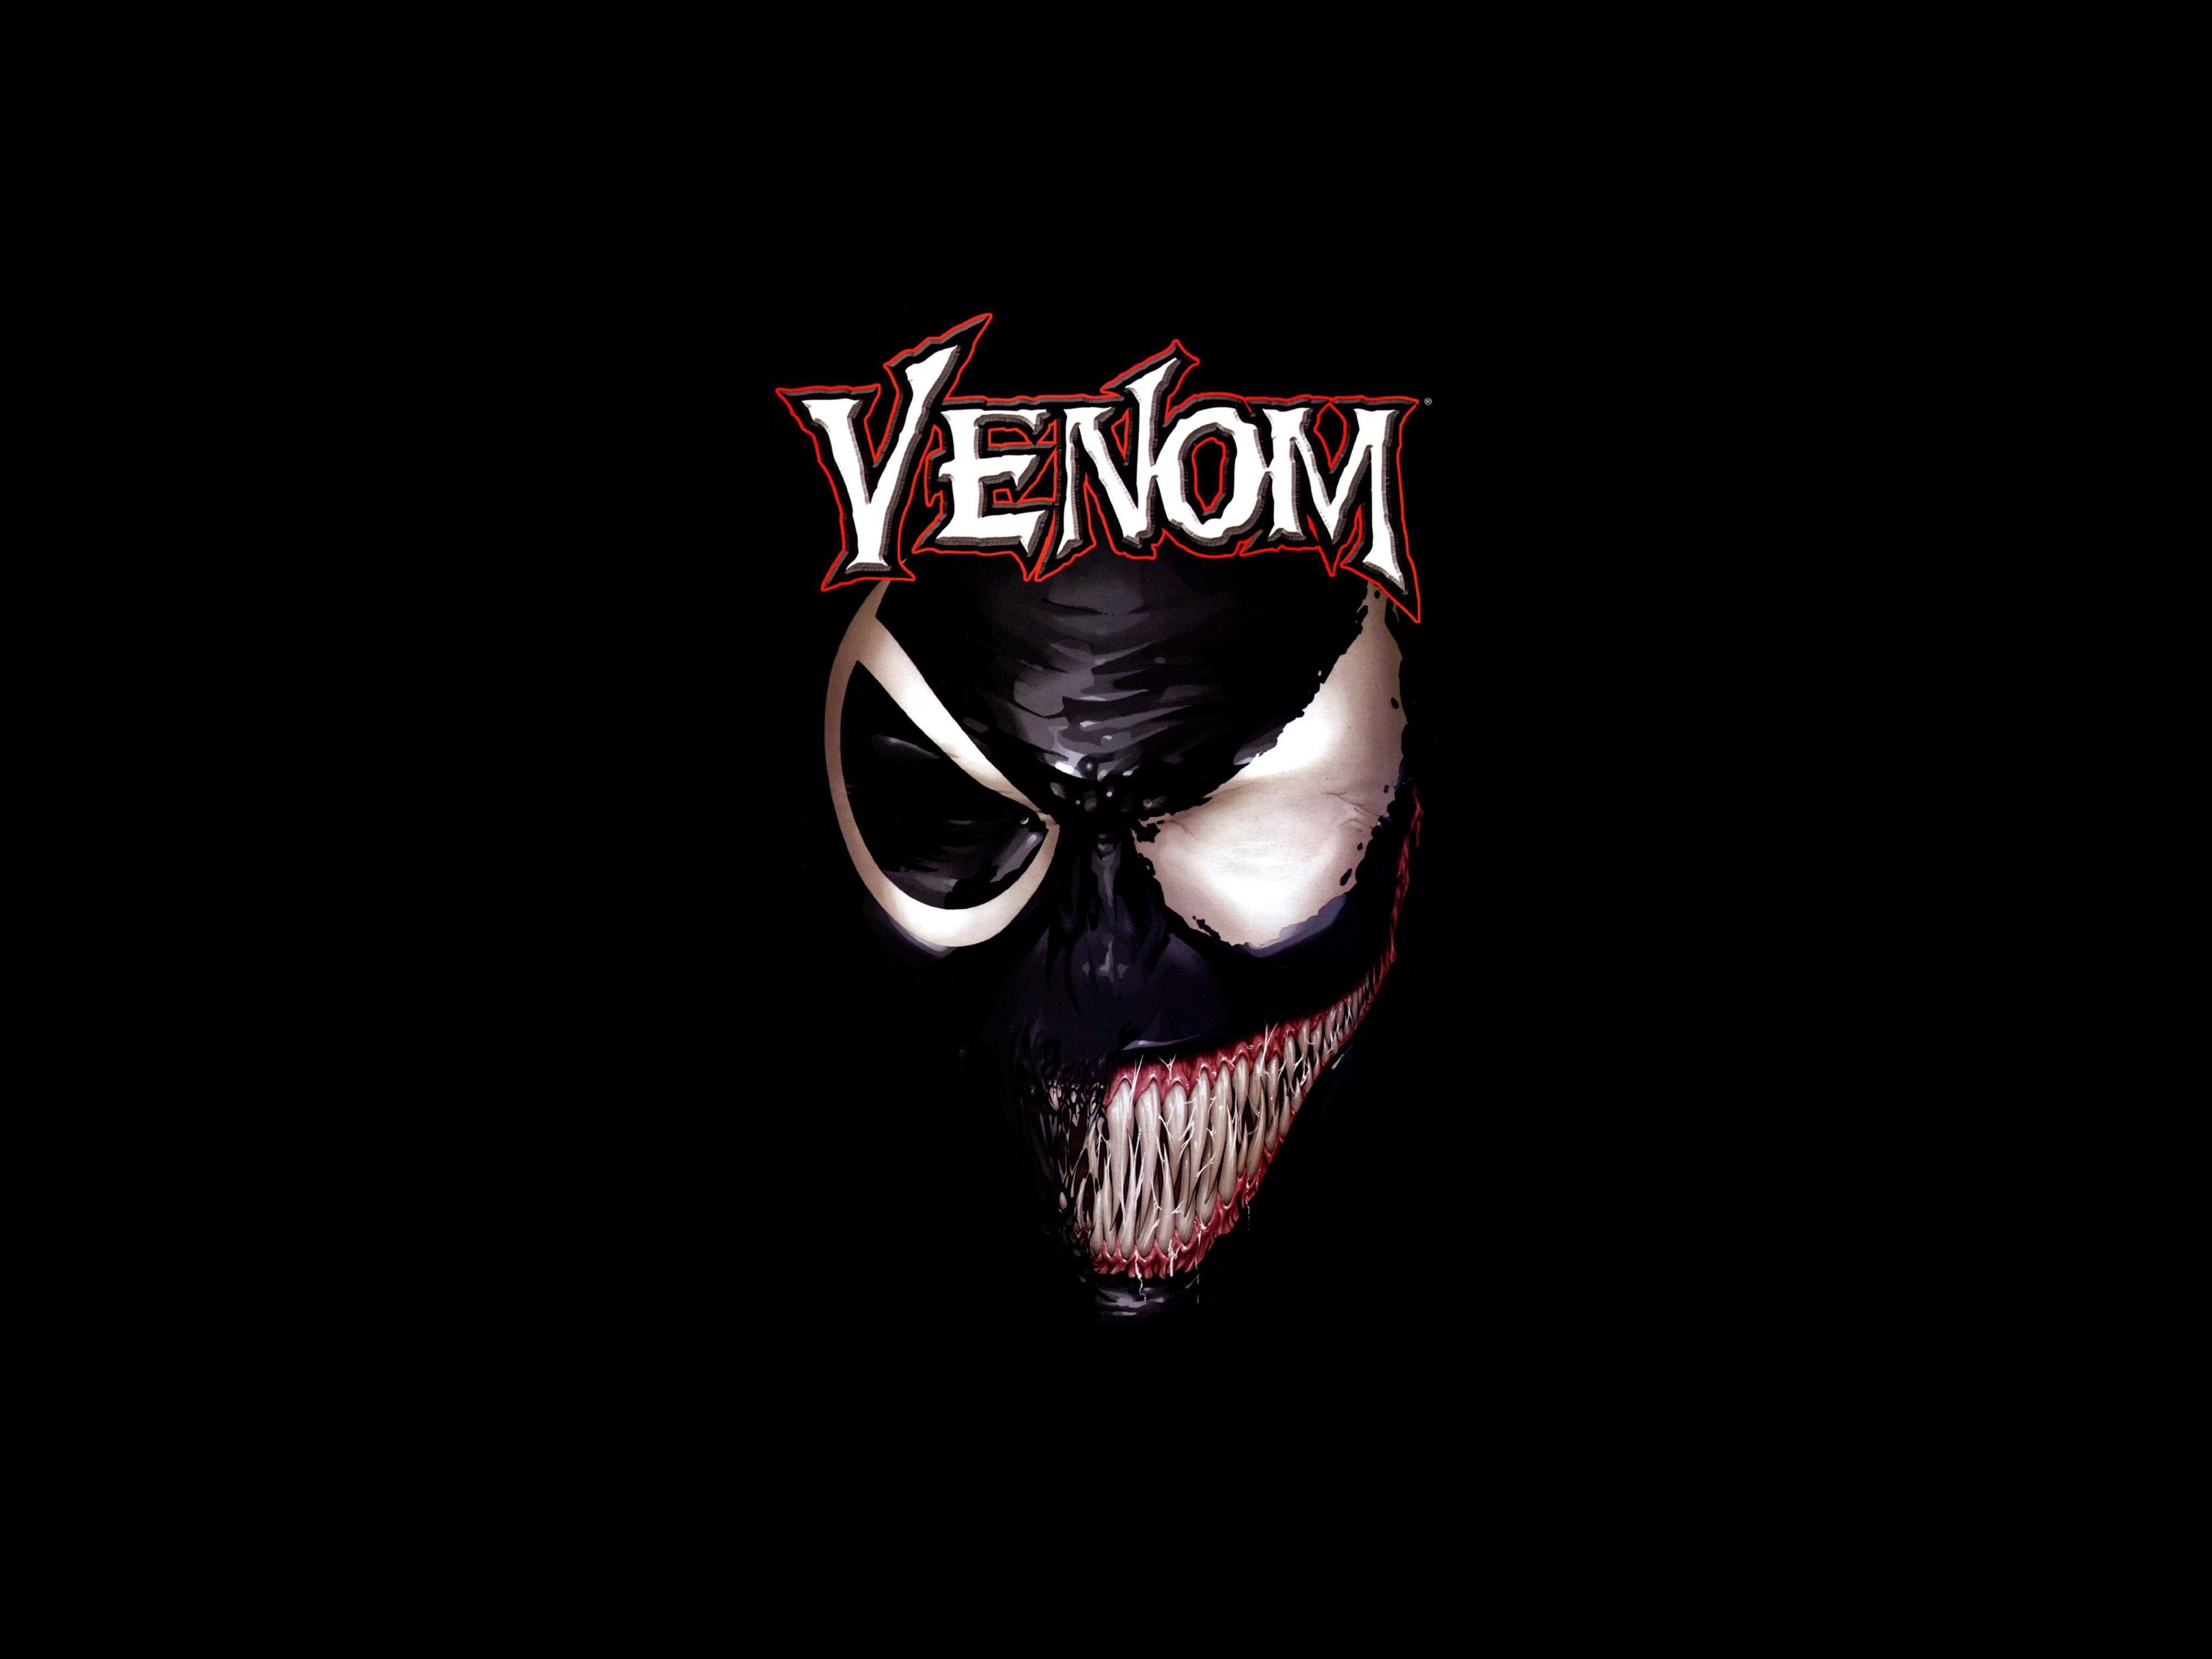 4K Ultra HD Venom Wallpaper and Background Image